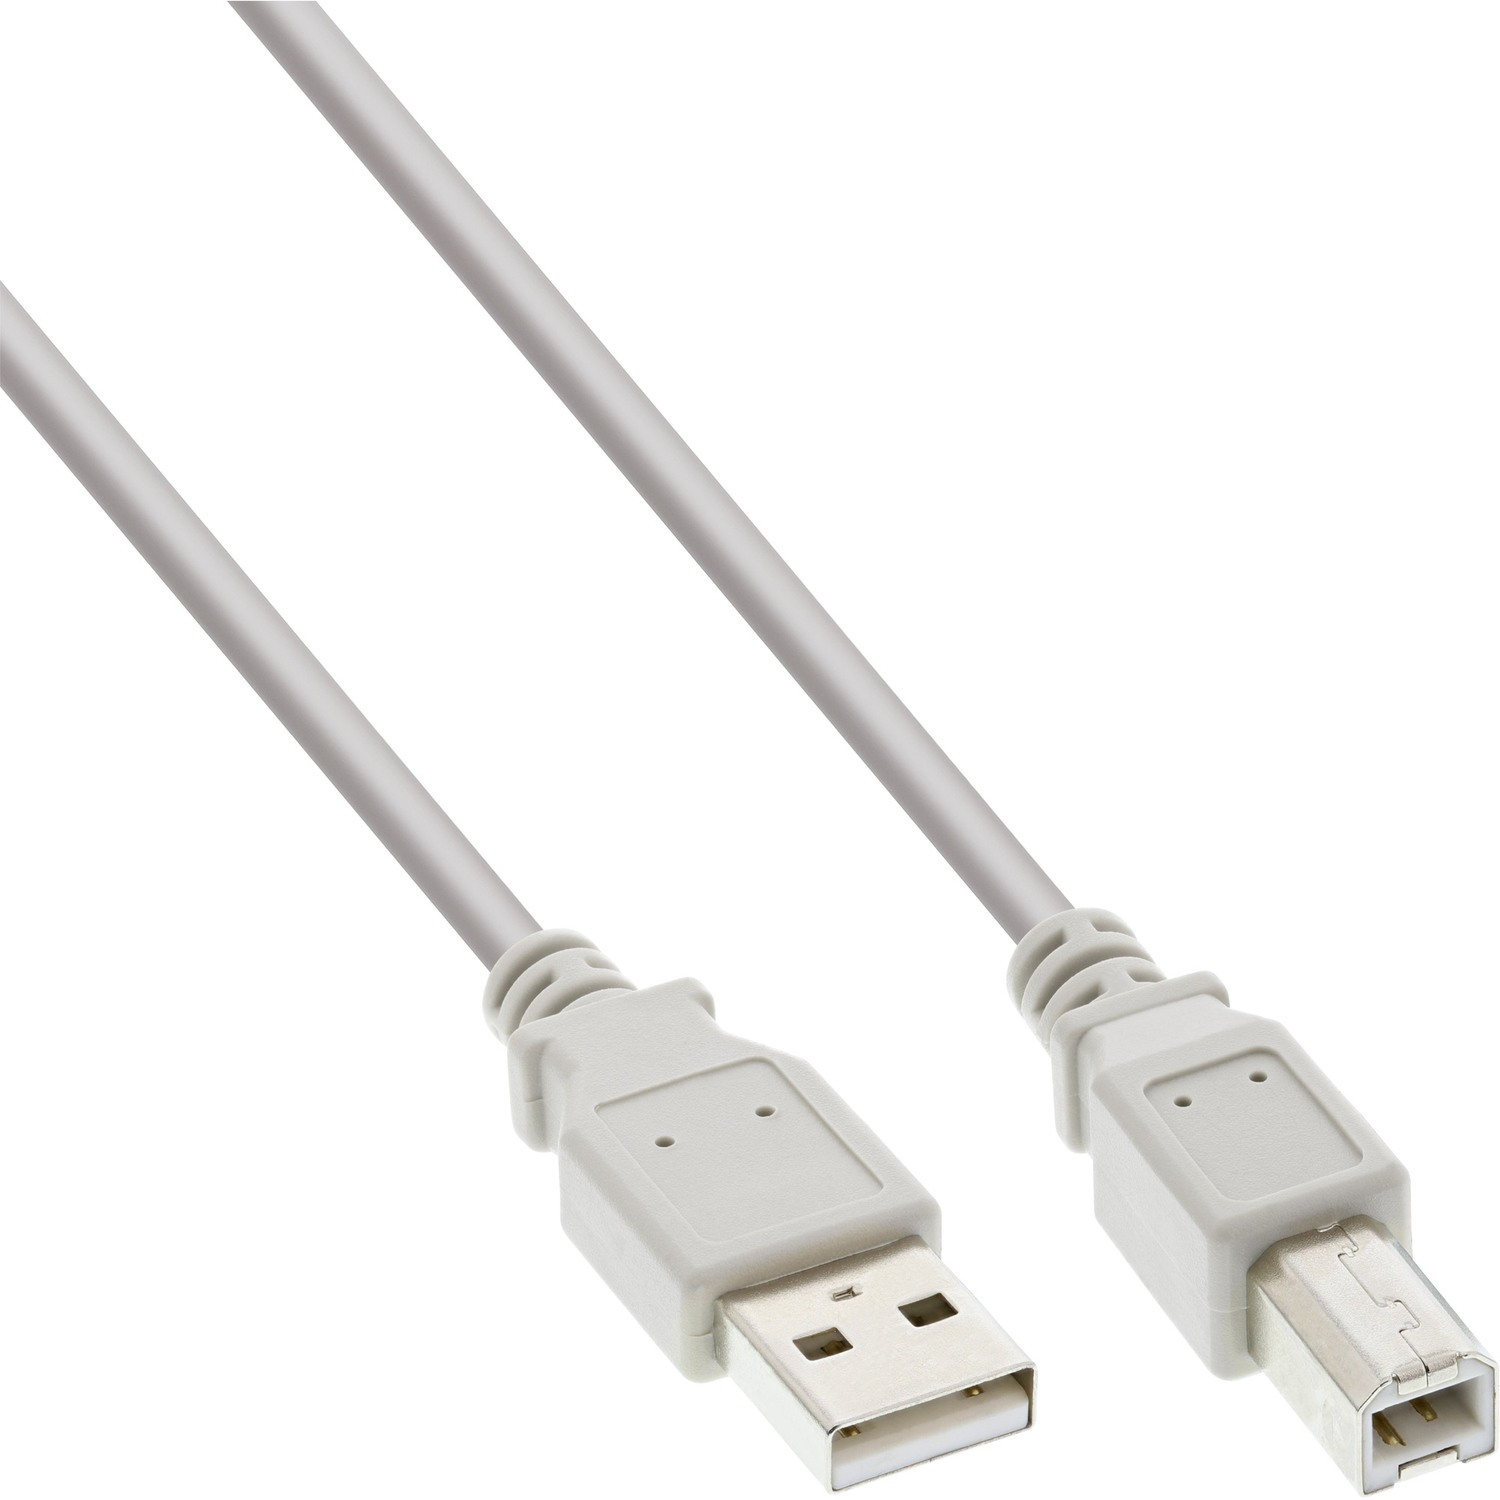 2.0 USB 2.0 INLINE B, USB beige, USB USB Kabel, 1m A Kabel an InLine®